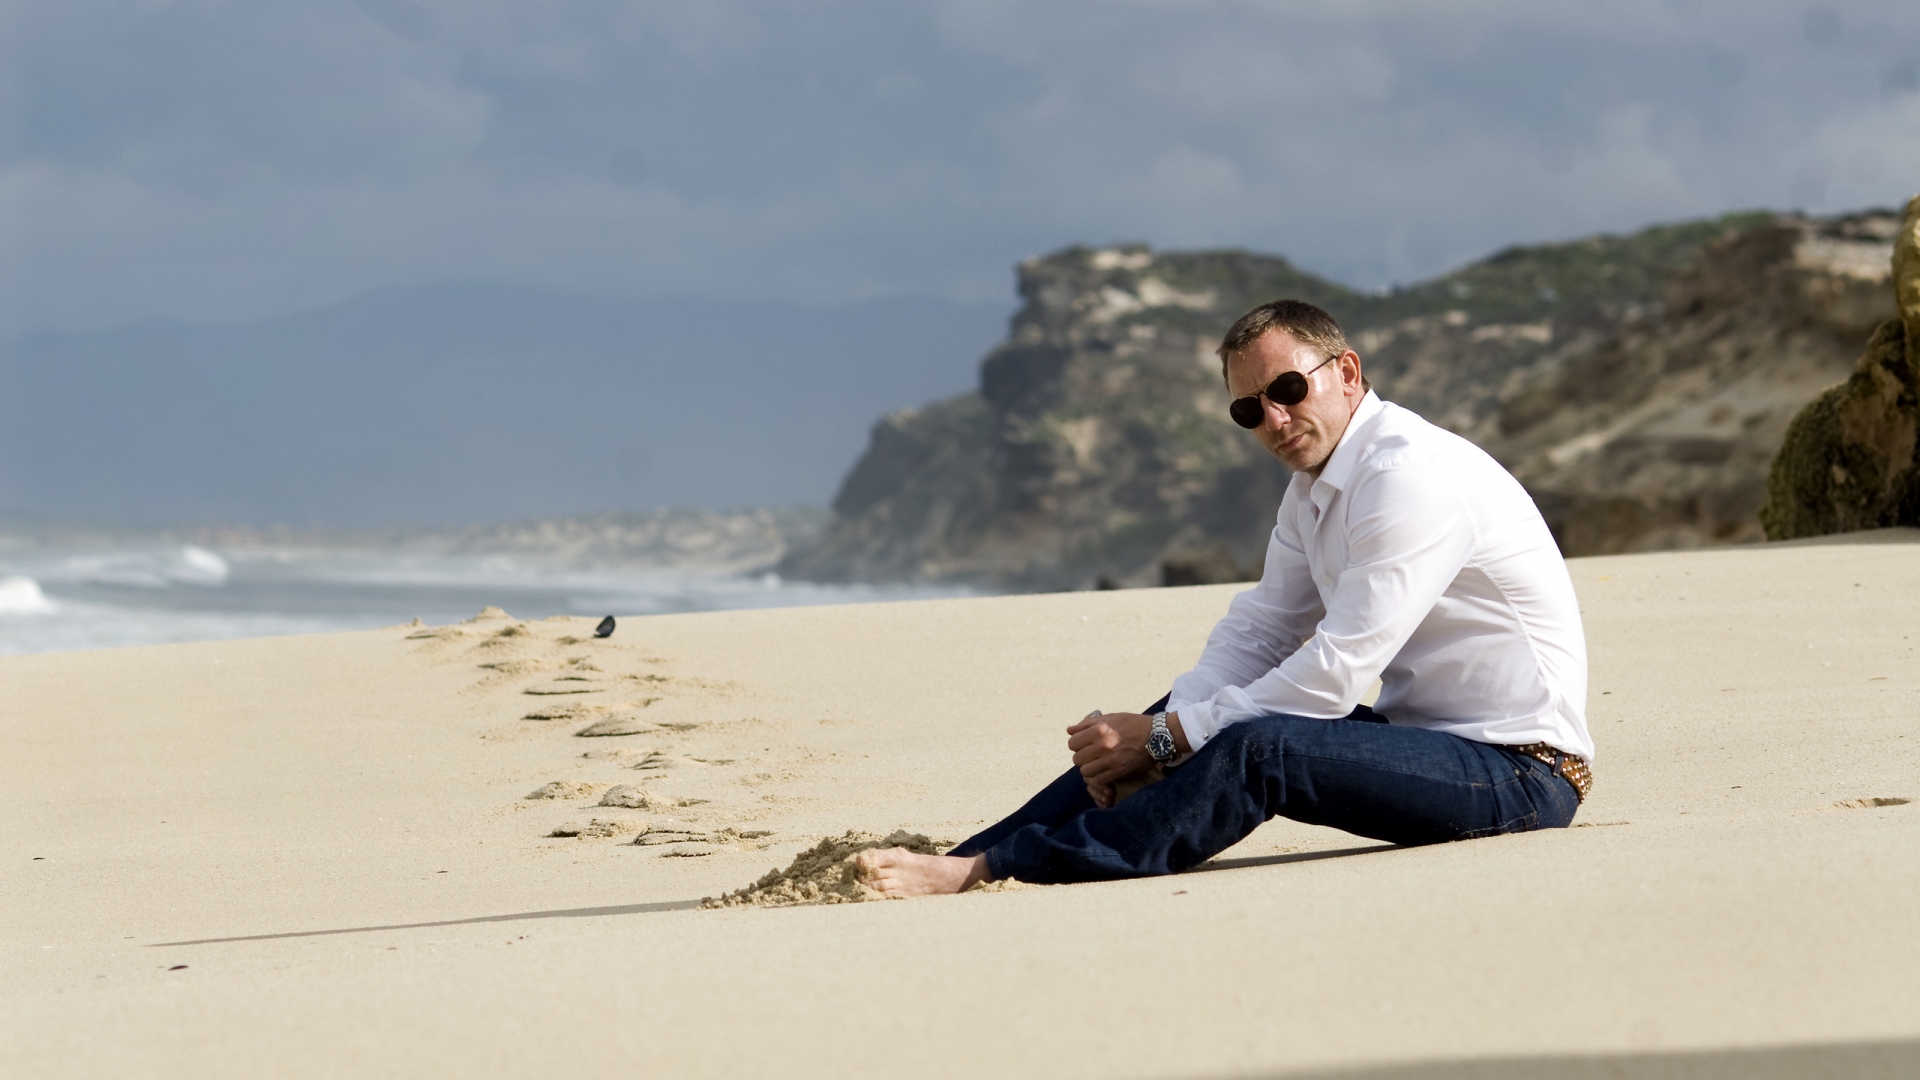 Daniel Craig on the Beach for 1920 x 1080 HDTV 1080p resolution